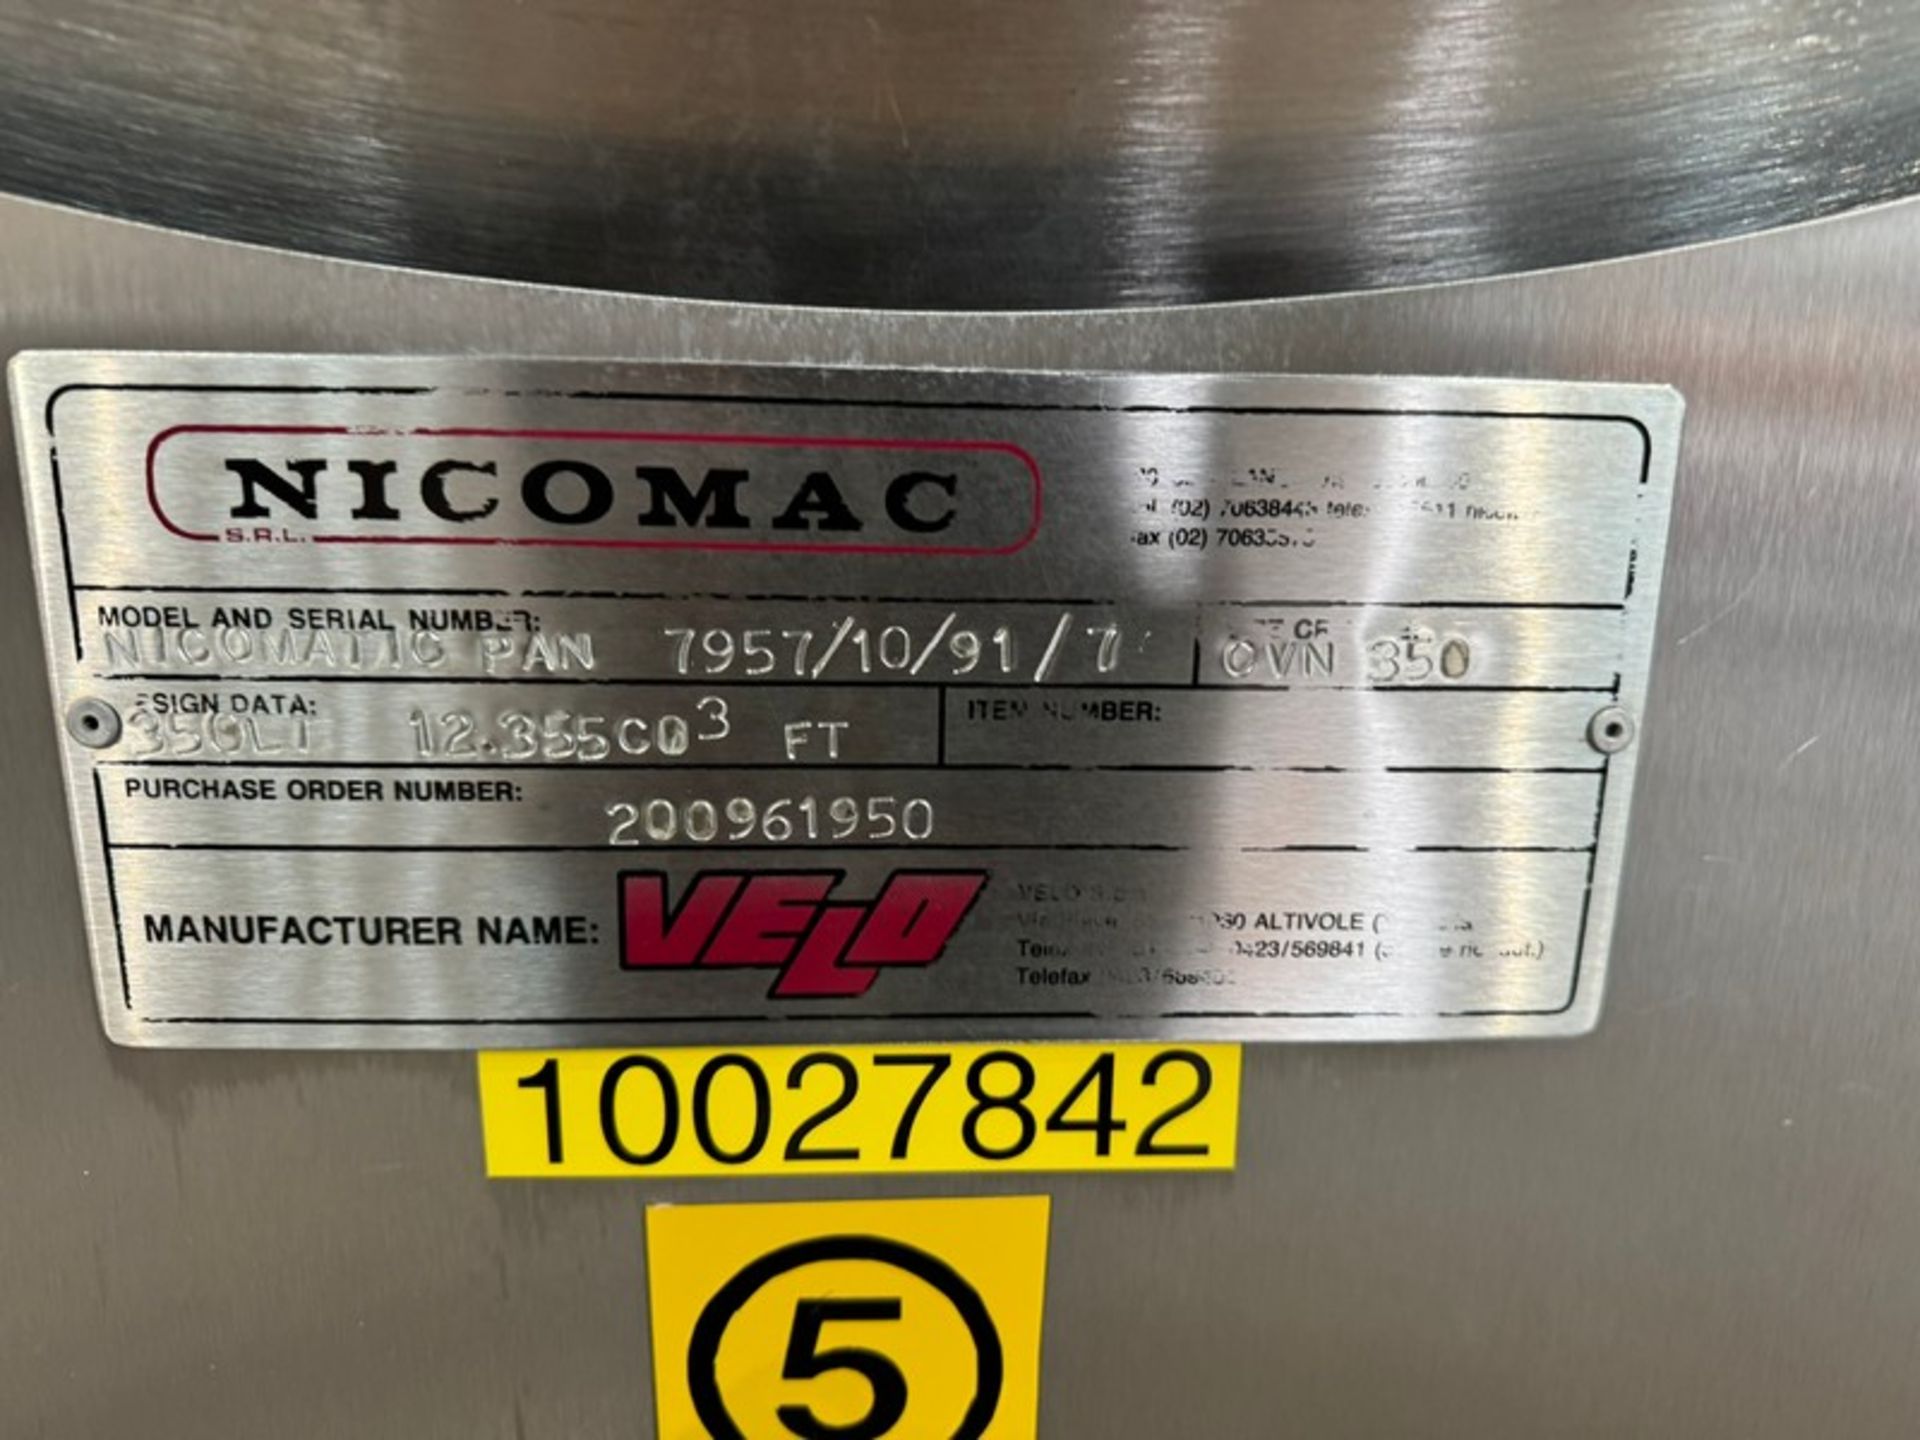 Nicomac S/S Coating Pan, M/N NICOMATIC PAN, S/N 7957/10/91/7, Size or Type: CVN 350, Design Data: - Image 4 of 10